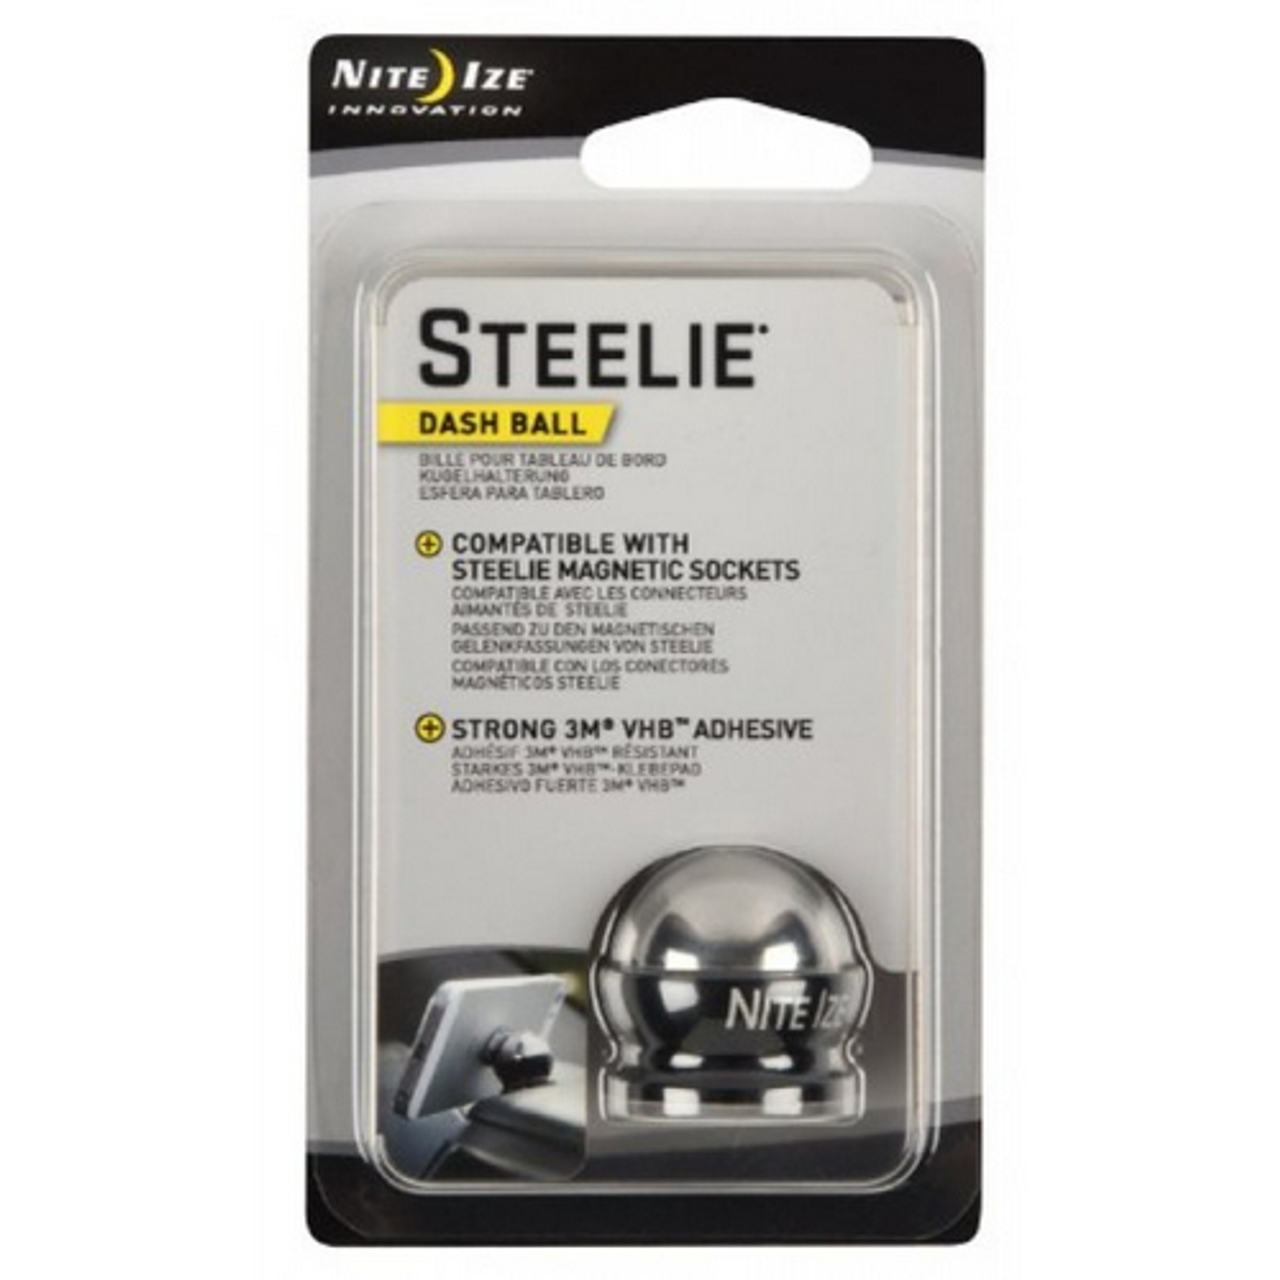 NITE-IZE 094664029965 Steelie Dash Ball - GMS TACTICAL